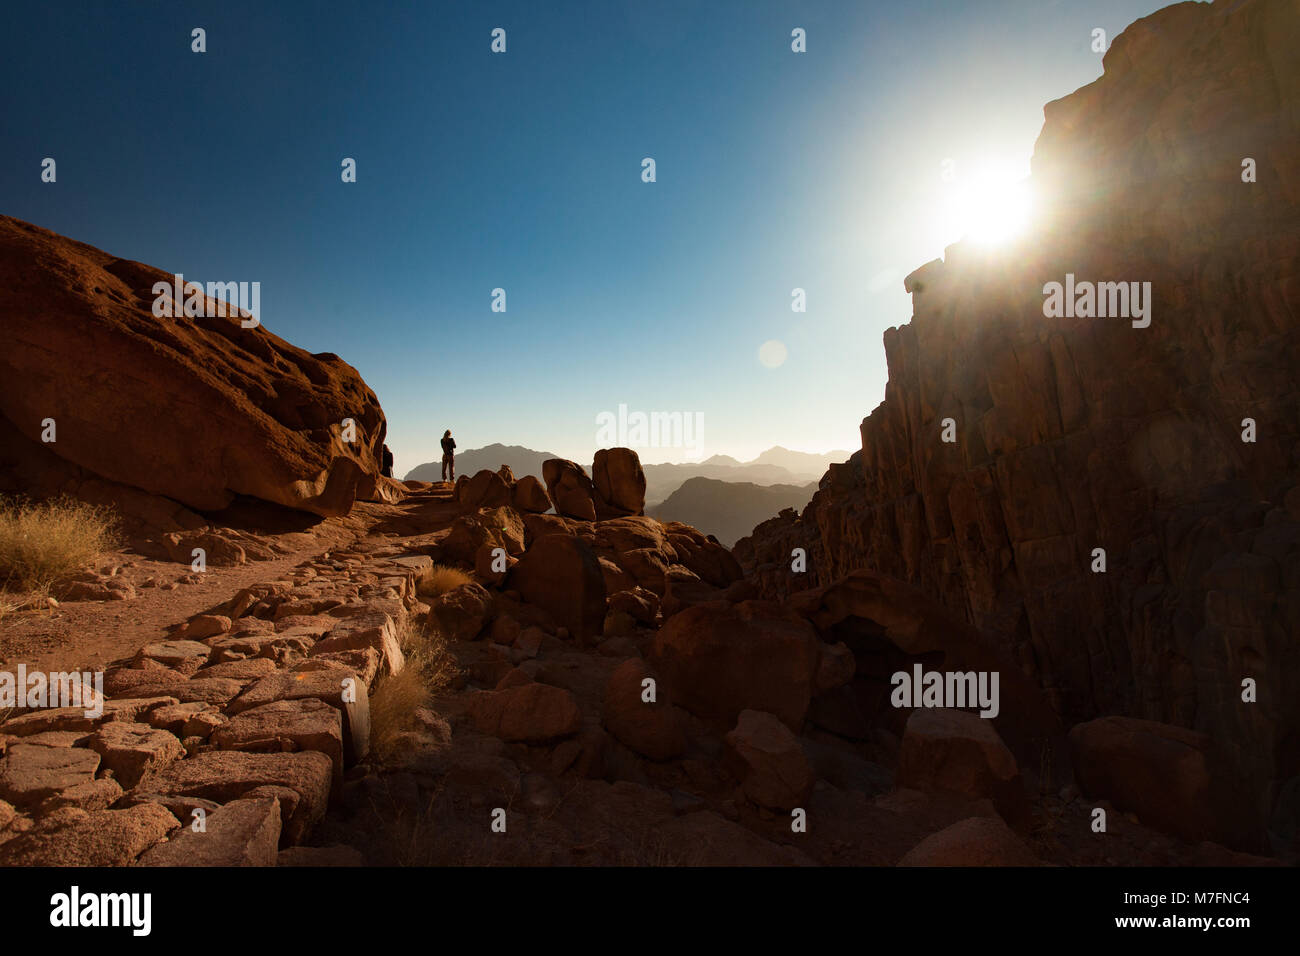 Man greets the beautiful sunrise on Mount Sinai in Egypt. Stock Photo